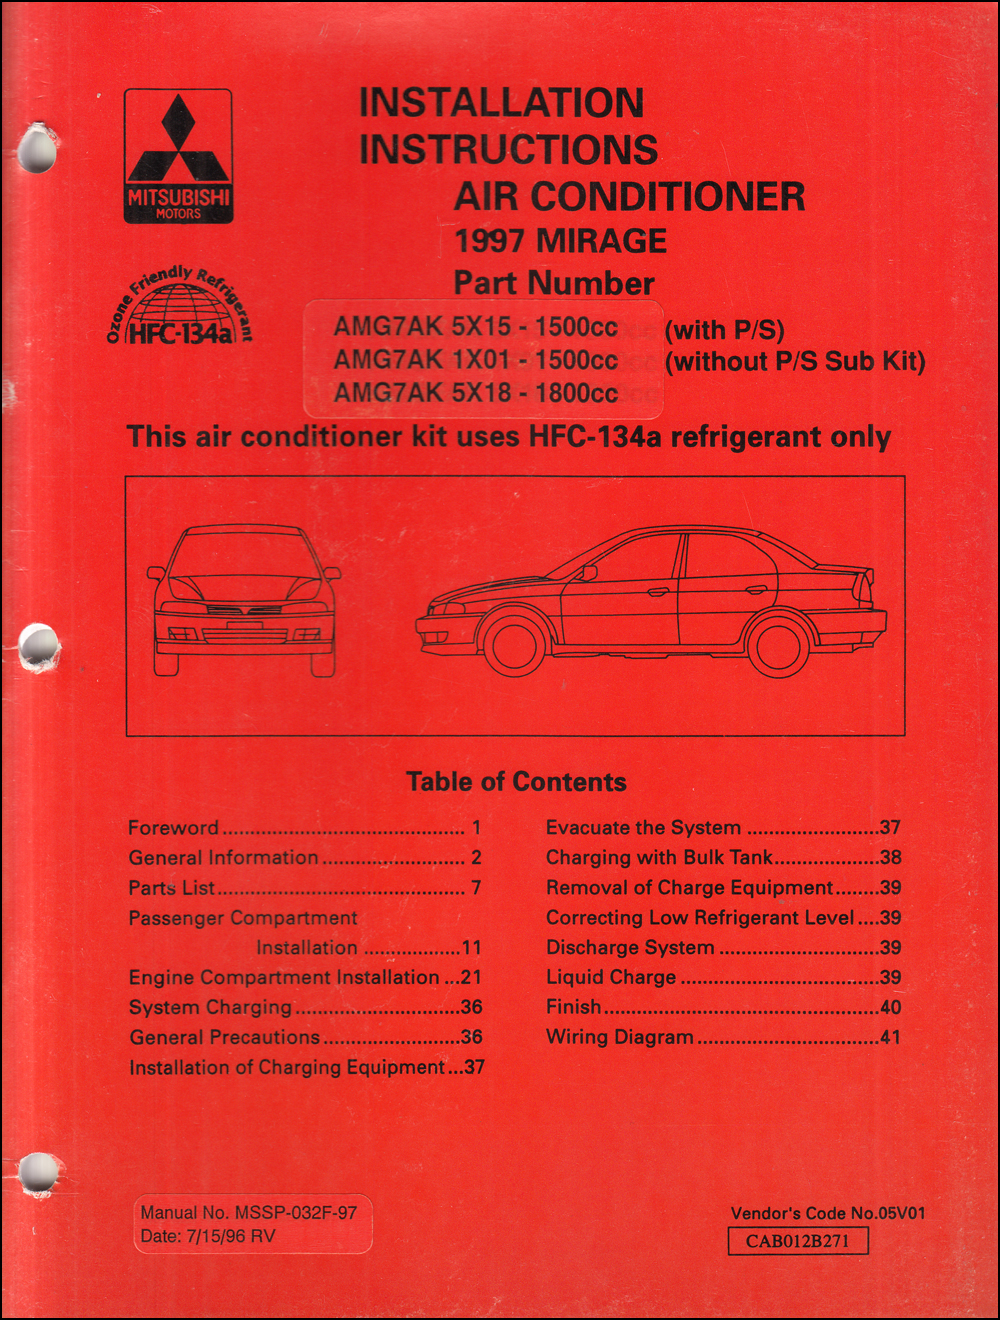 1997 Mitsubishi Mirage Air Conditioner Installation Instruction Manual Original A/C